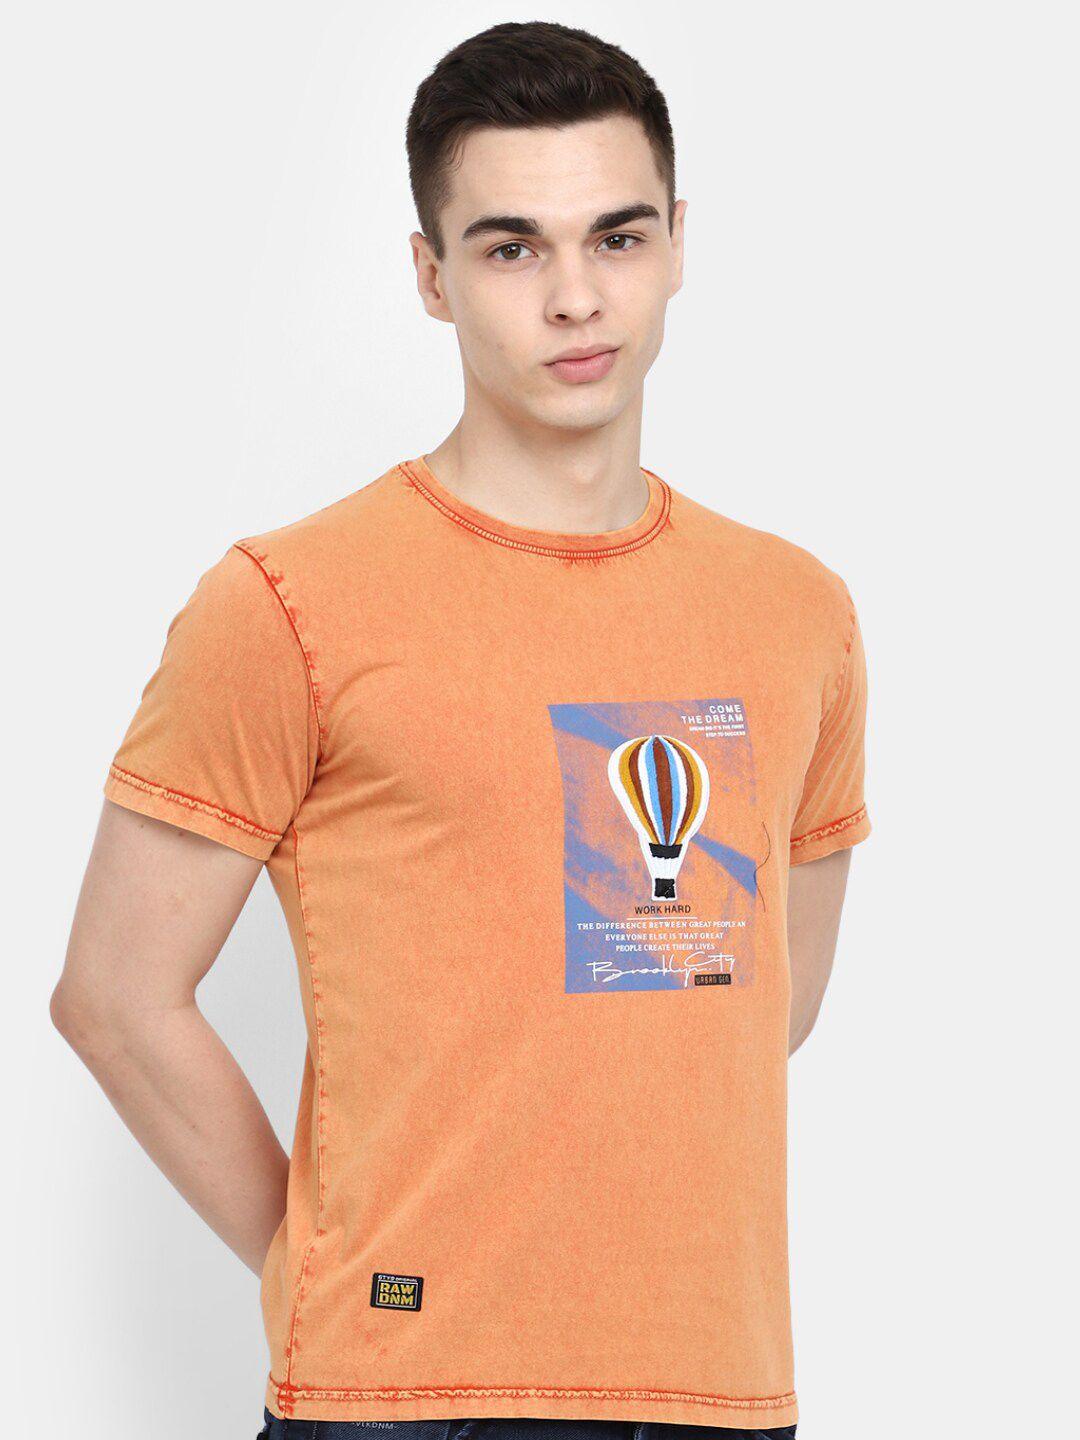 v-mart graphic printed round neck cotton slim fit t-shirt